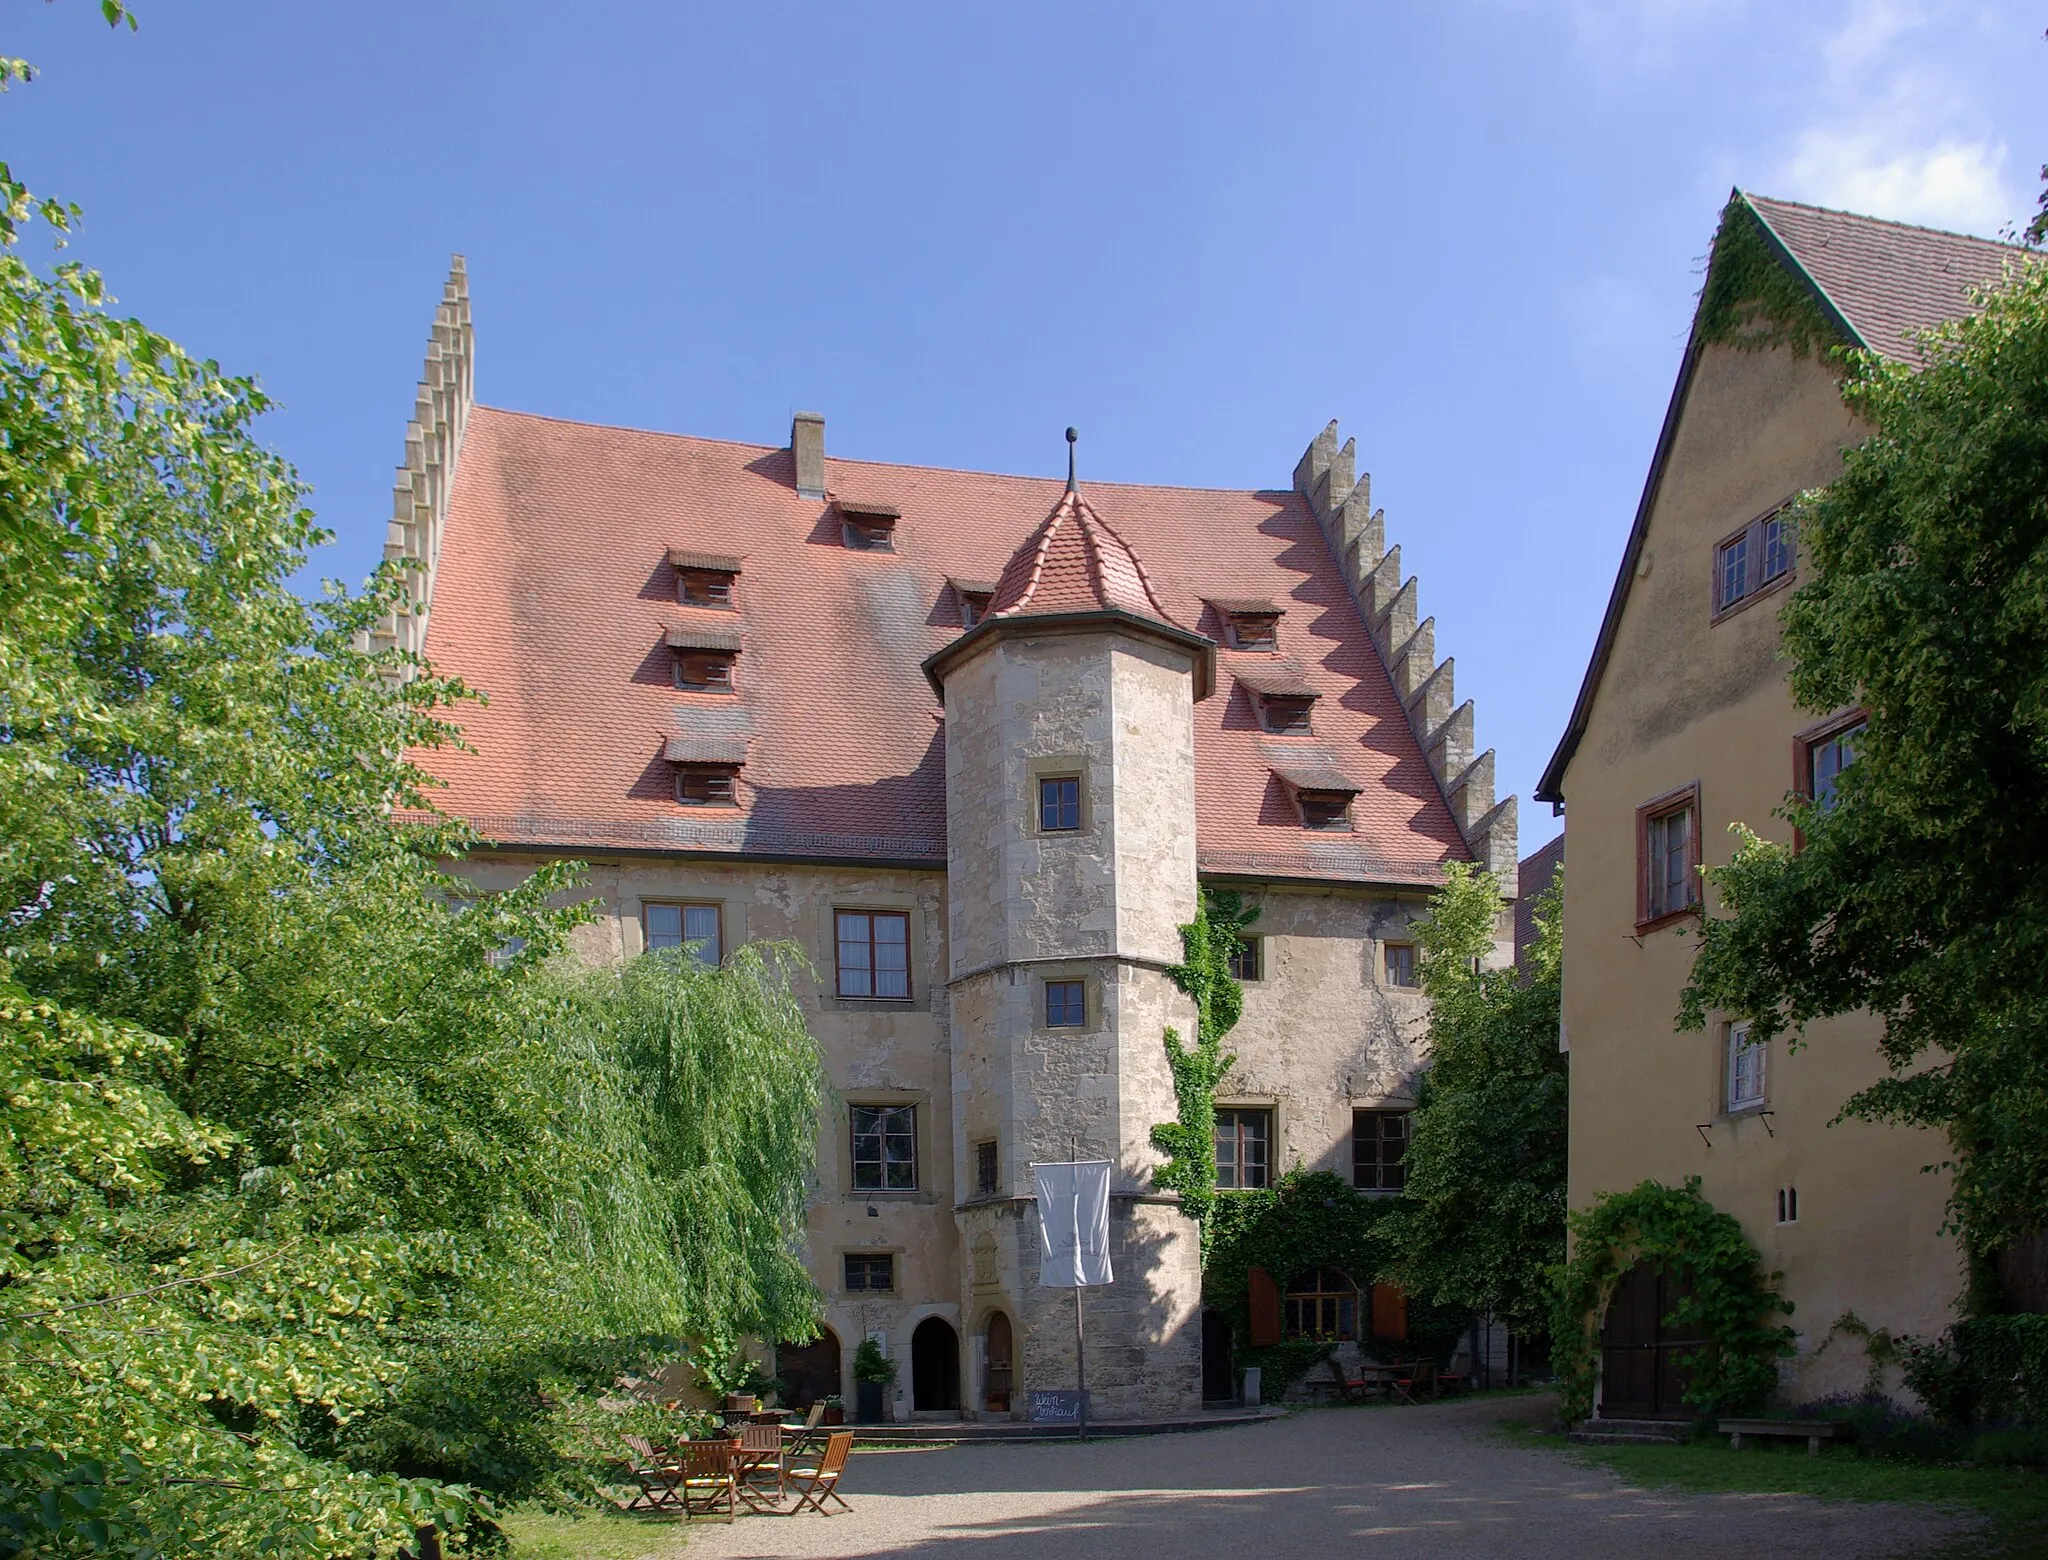 Image of Sommerhausen